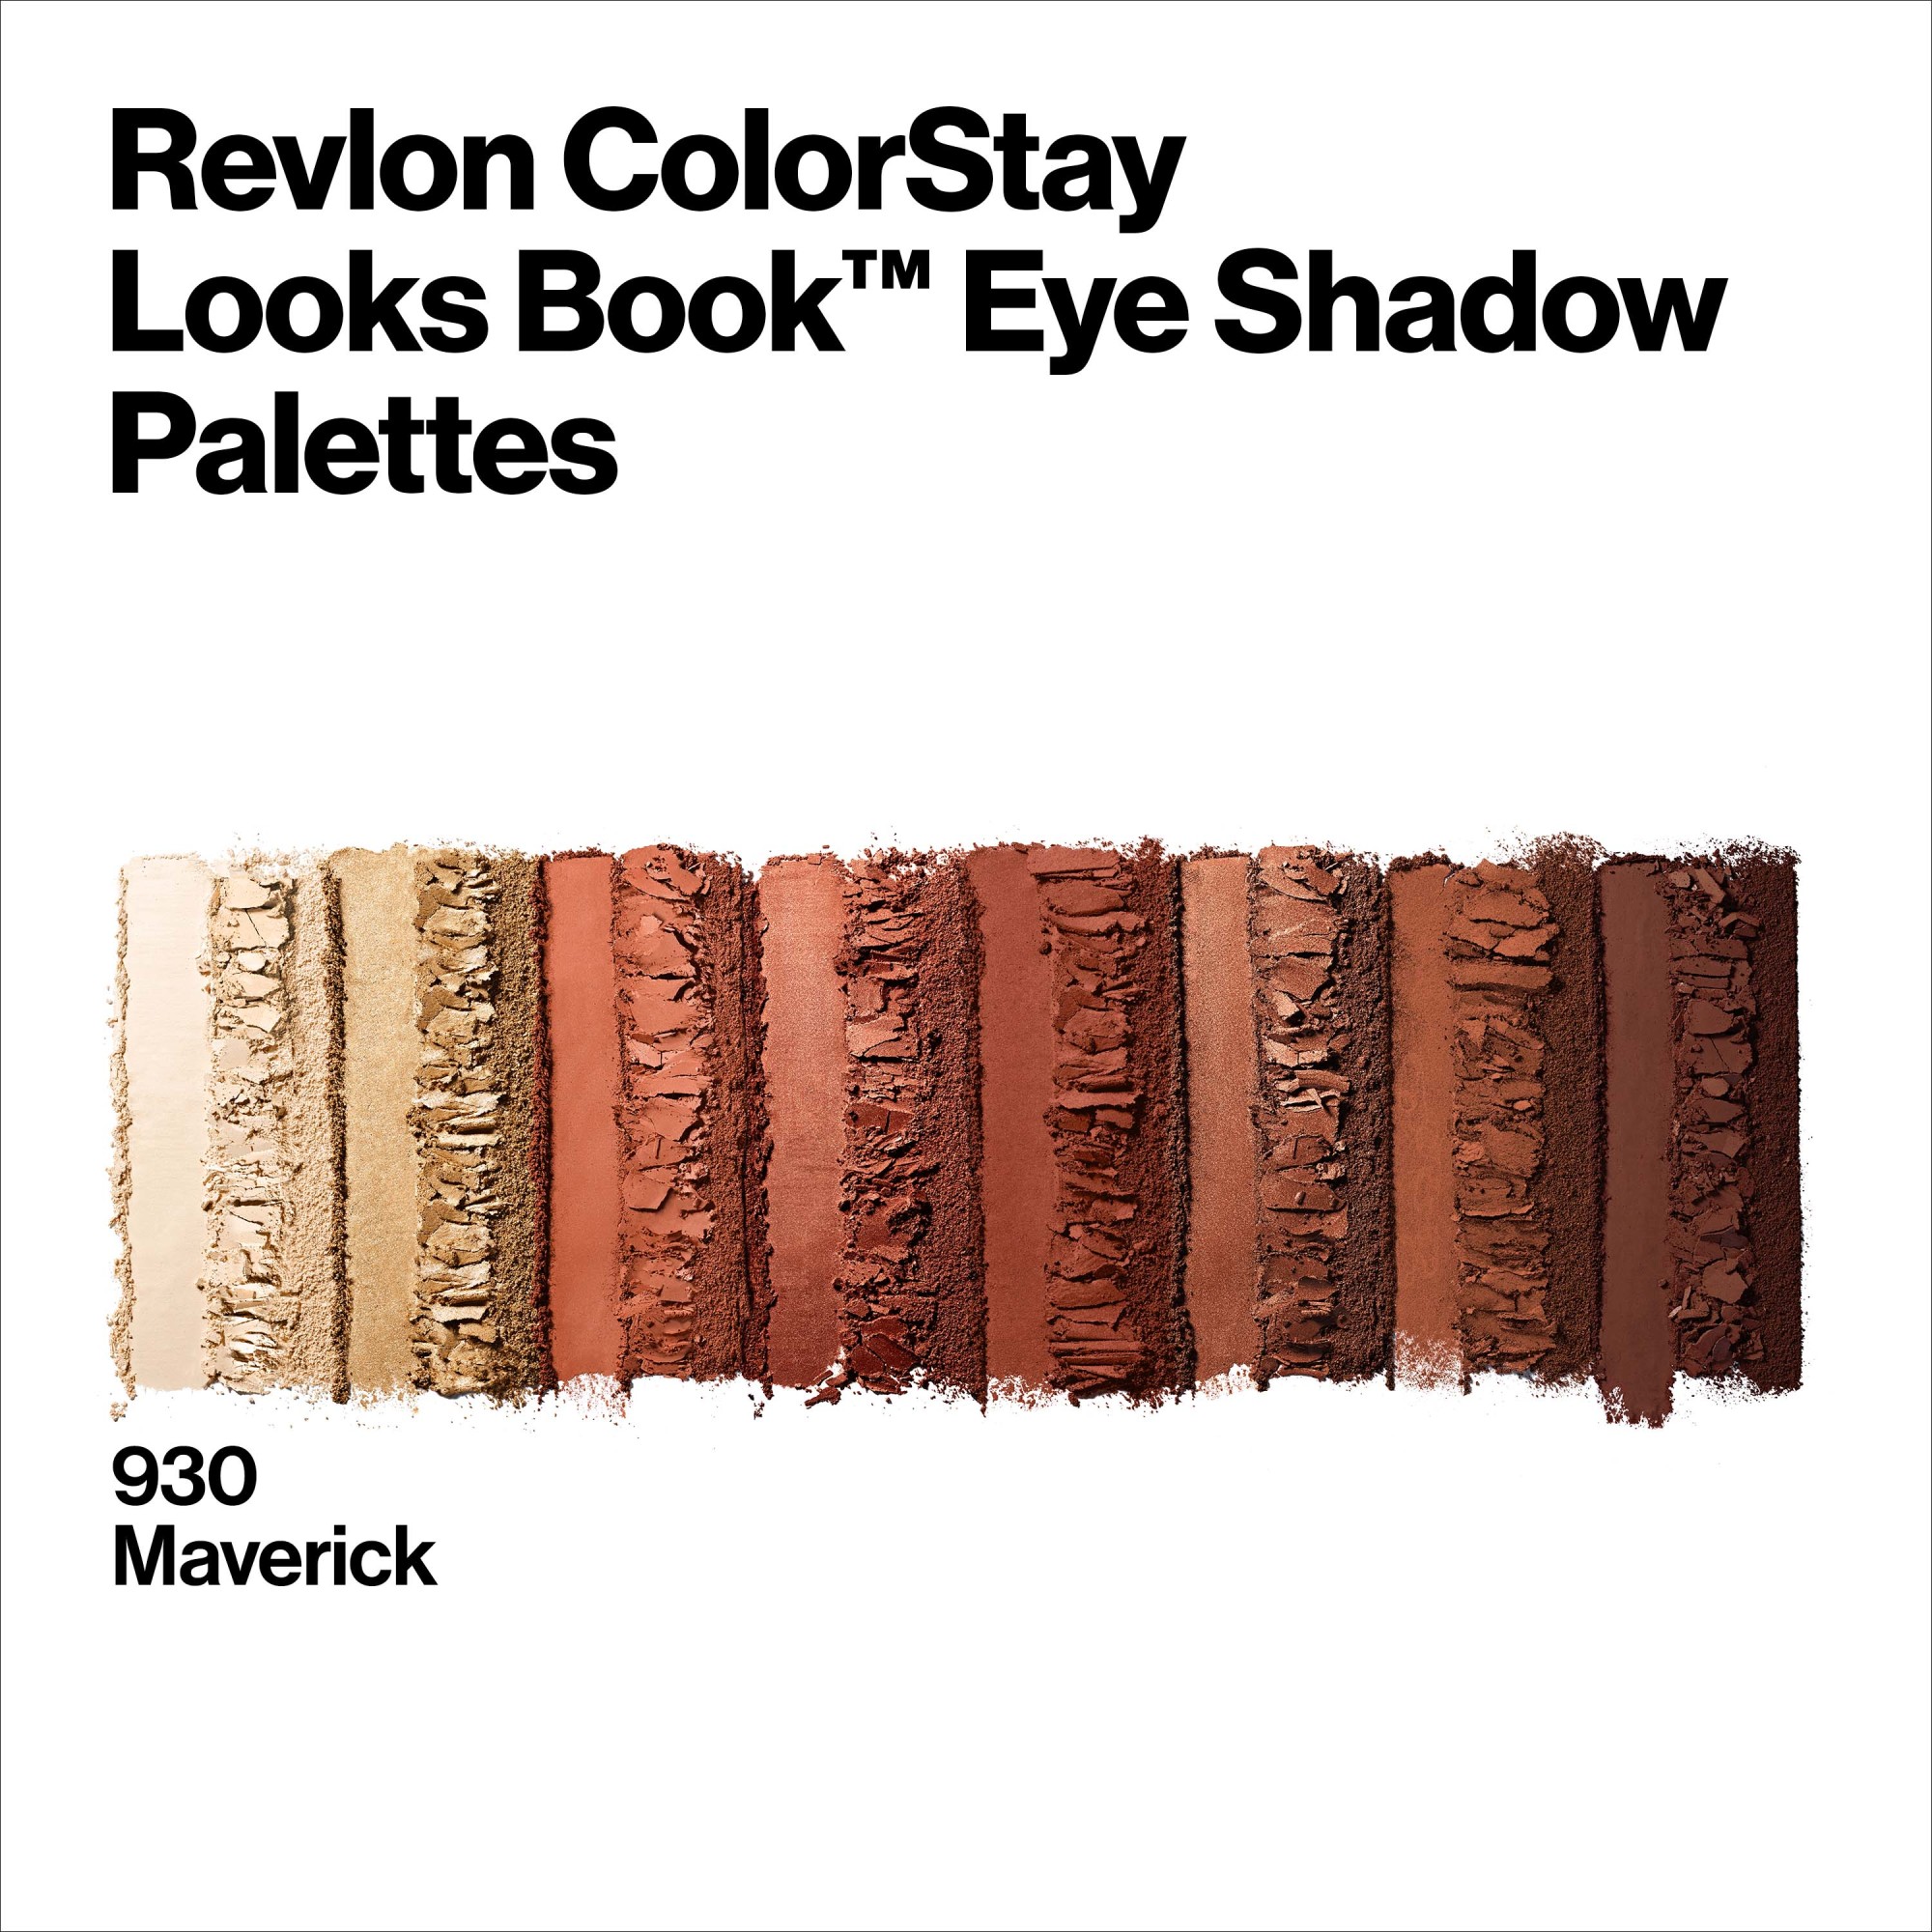 Revlon ColorStay Looks Book Eye Shadow Palette, 930 Maverick, 0.12 oz - image 3 of 9